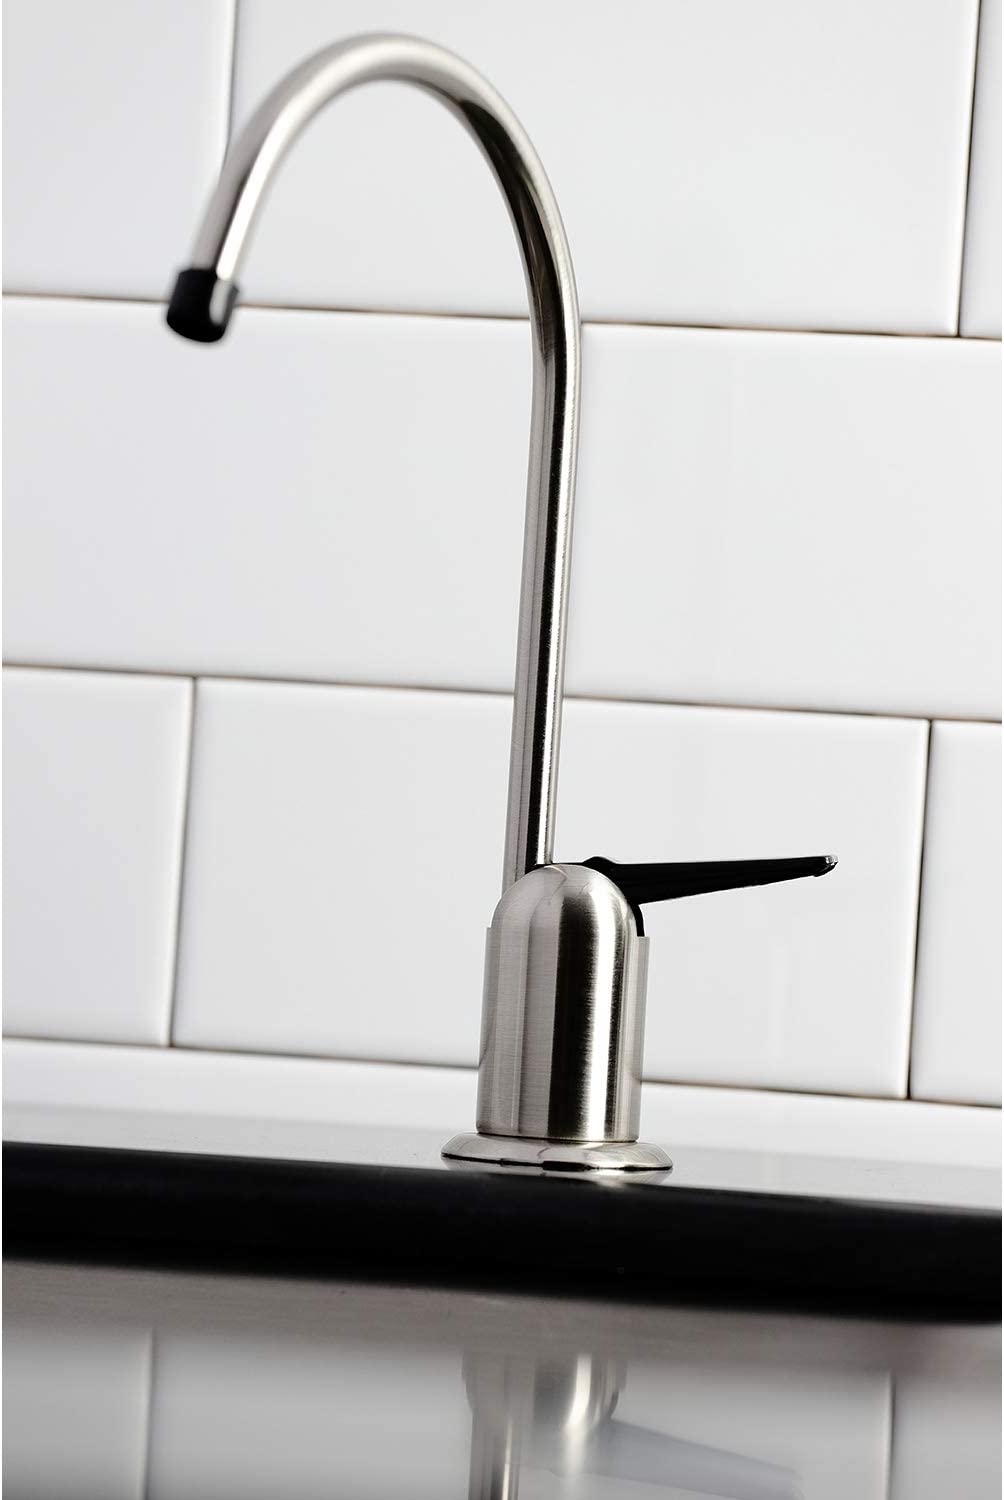 Kingston Brass K6194 Americana Water Filtration Faucet, Black Stainless